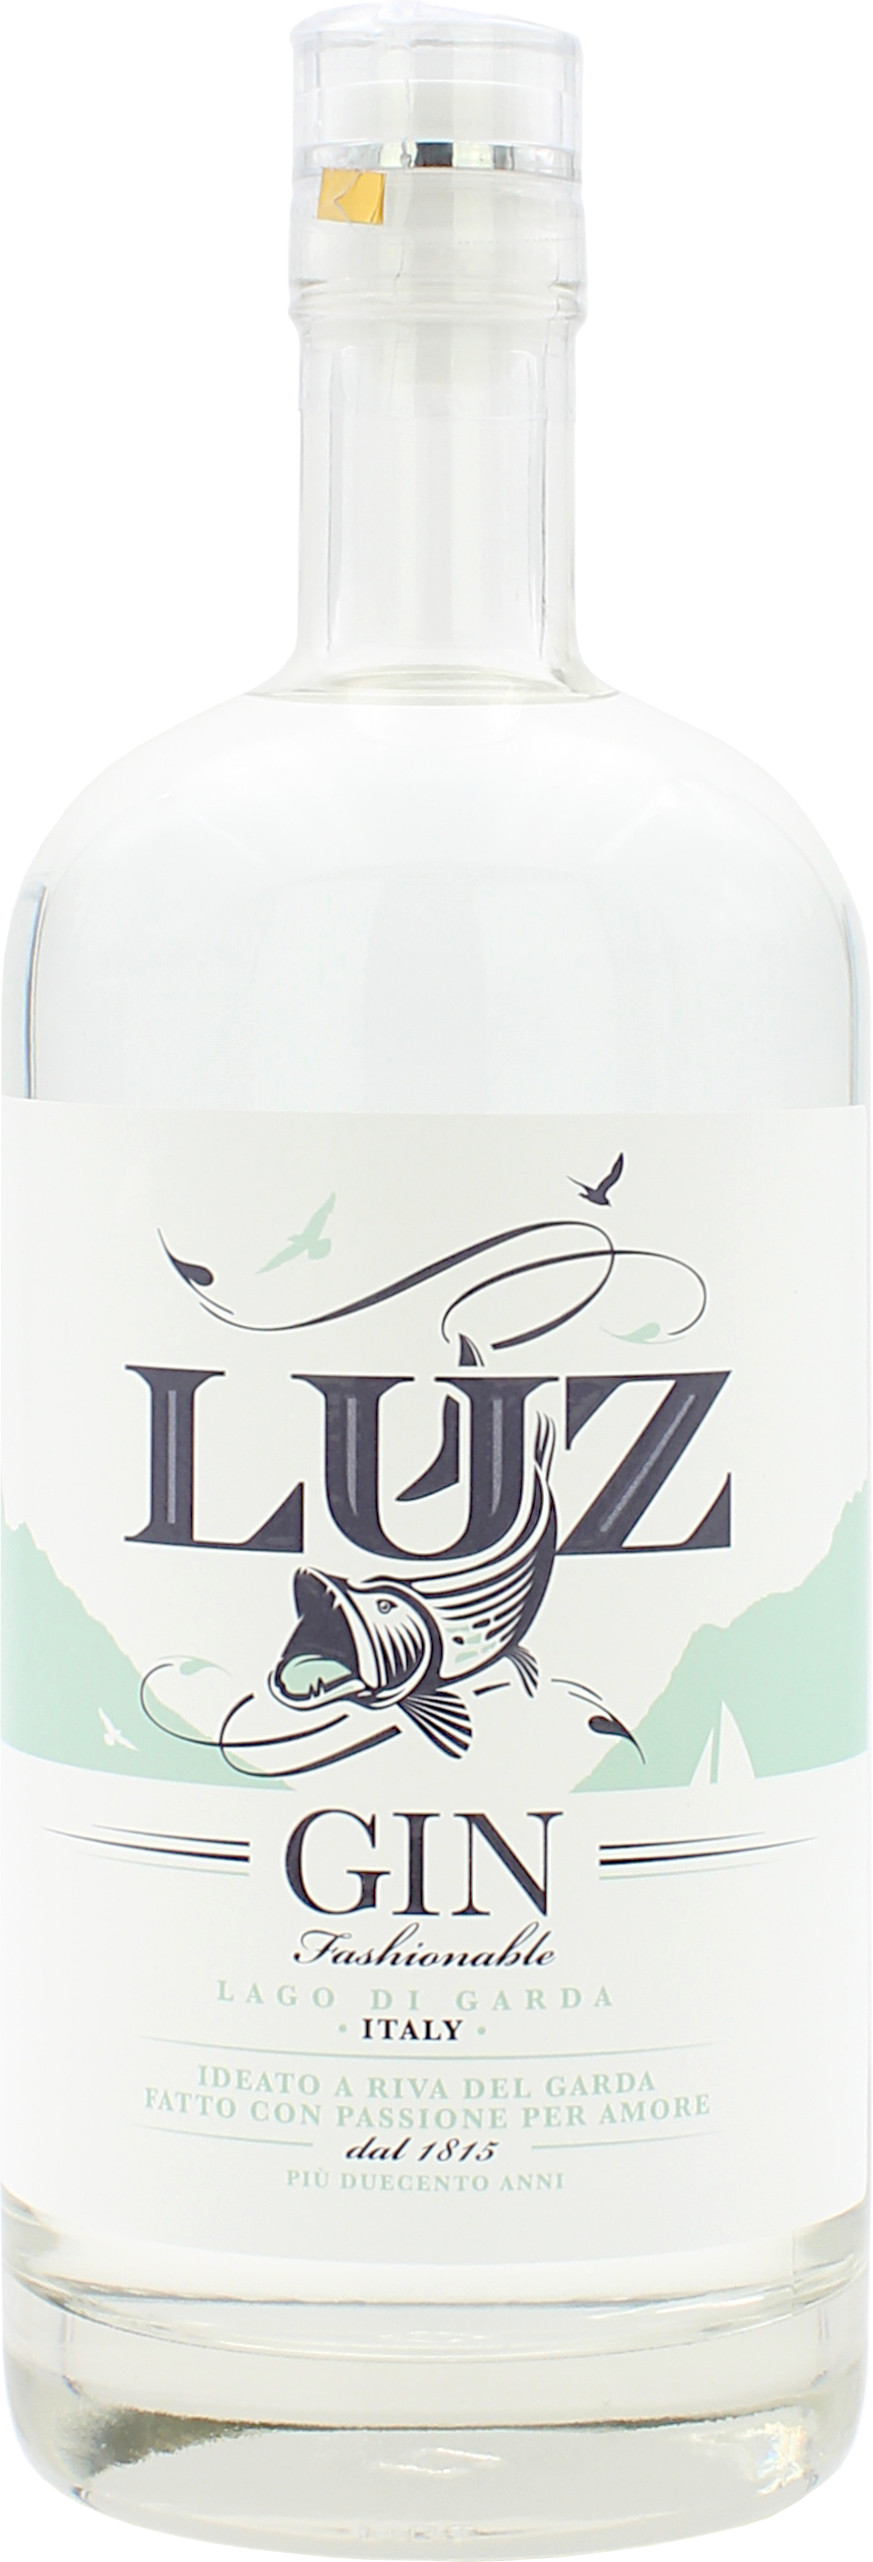 Luz Gin Lago Di Garda 45.0% 0,7l